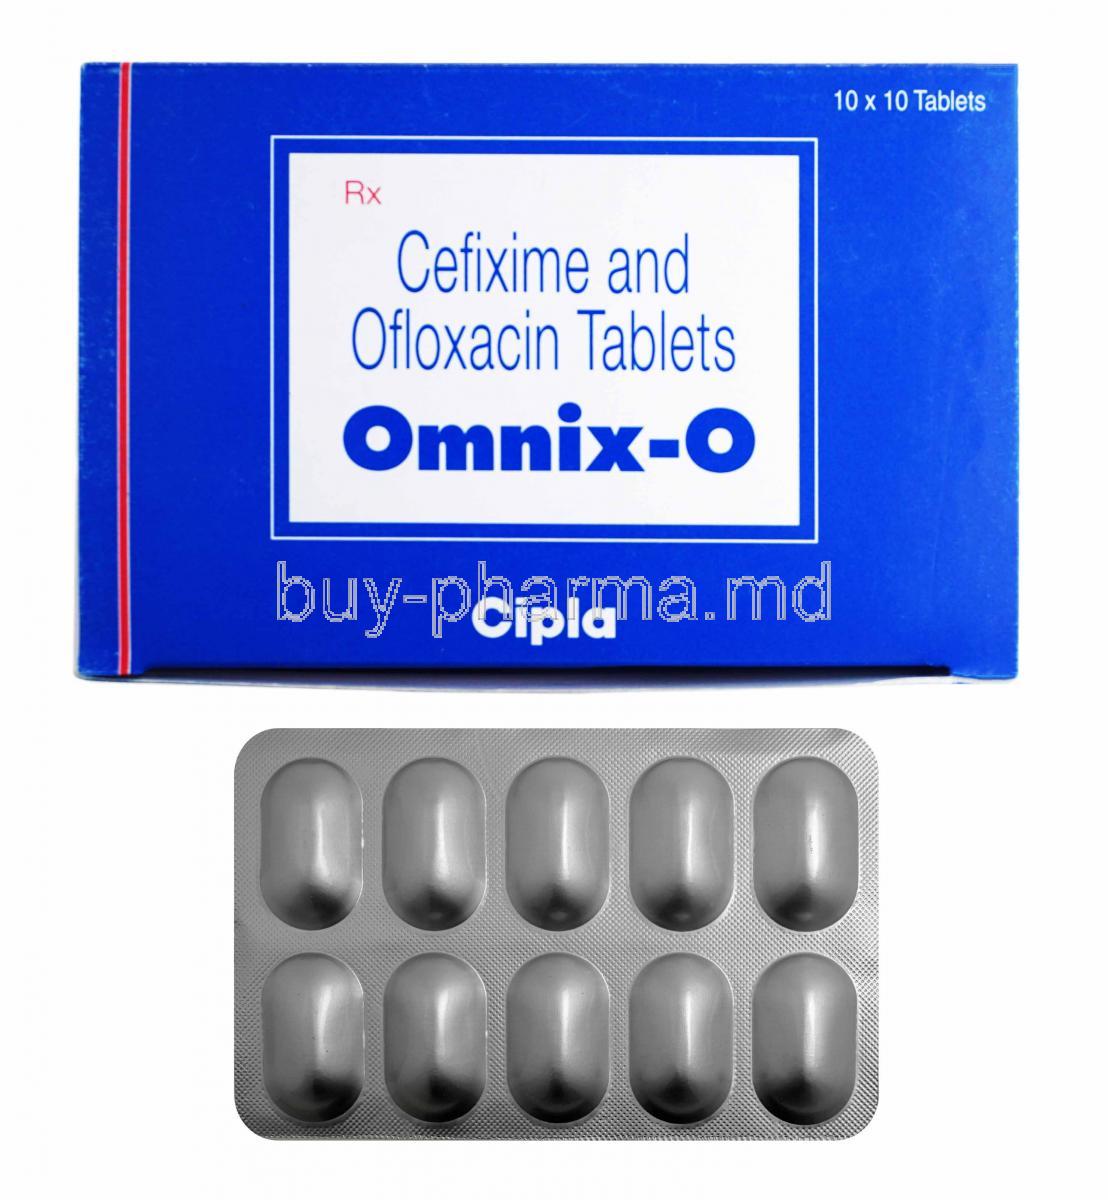 Omnix-O, Cefixime and Ofloxacin box and tablets